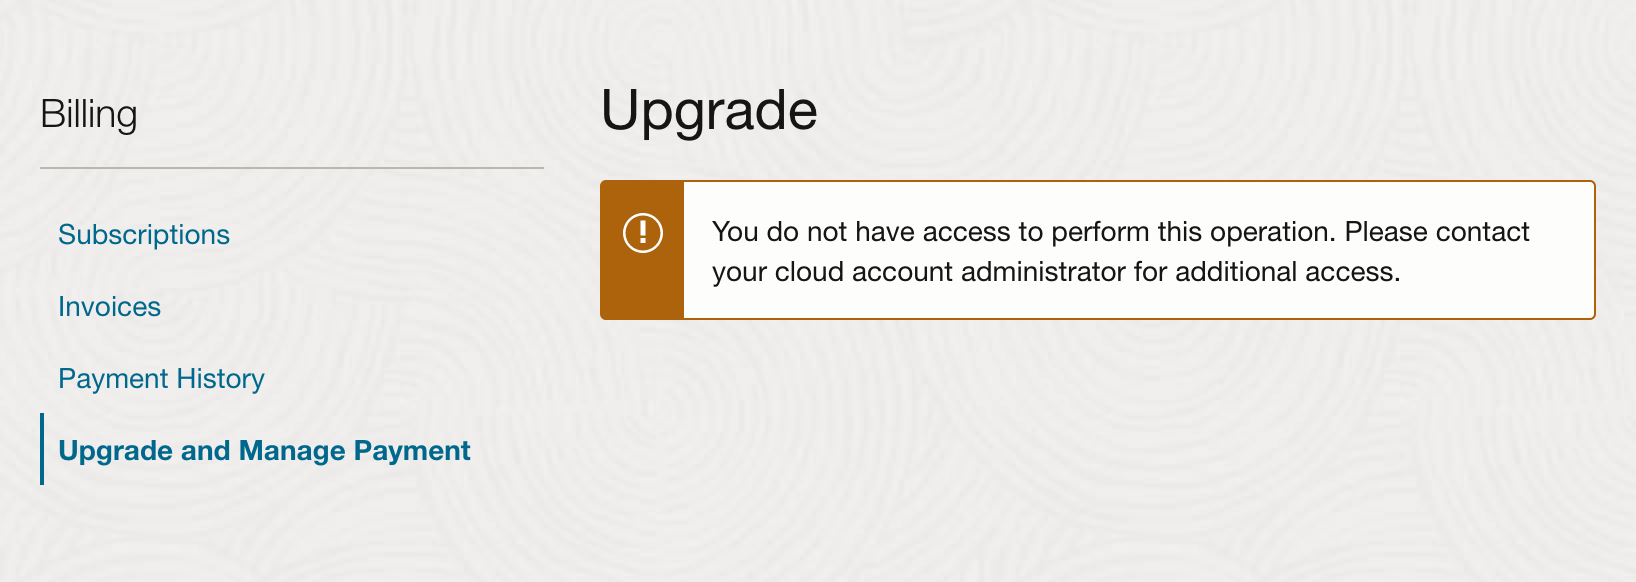 Oracle Cloud, upgrade error